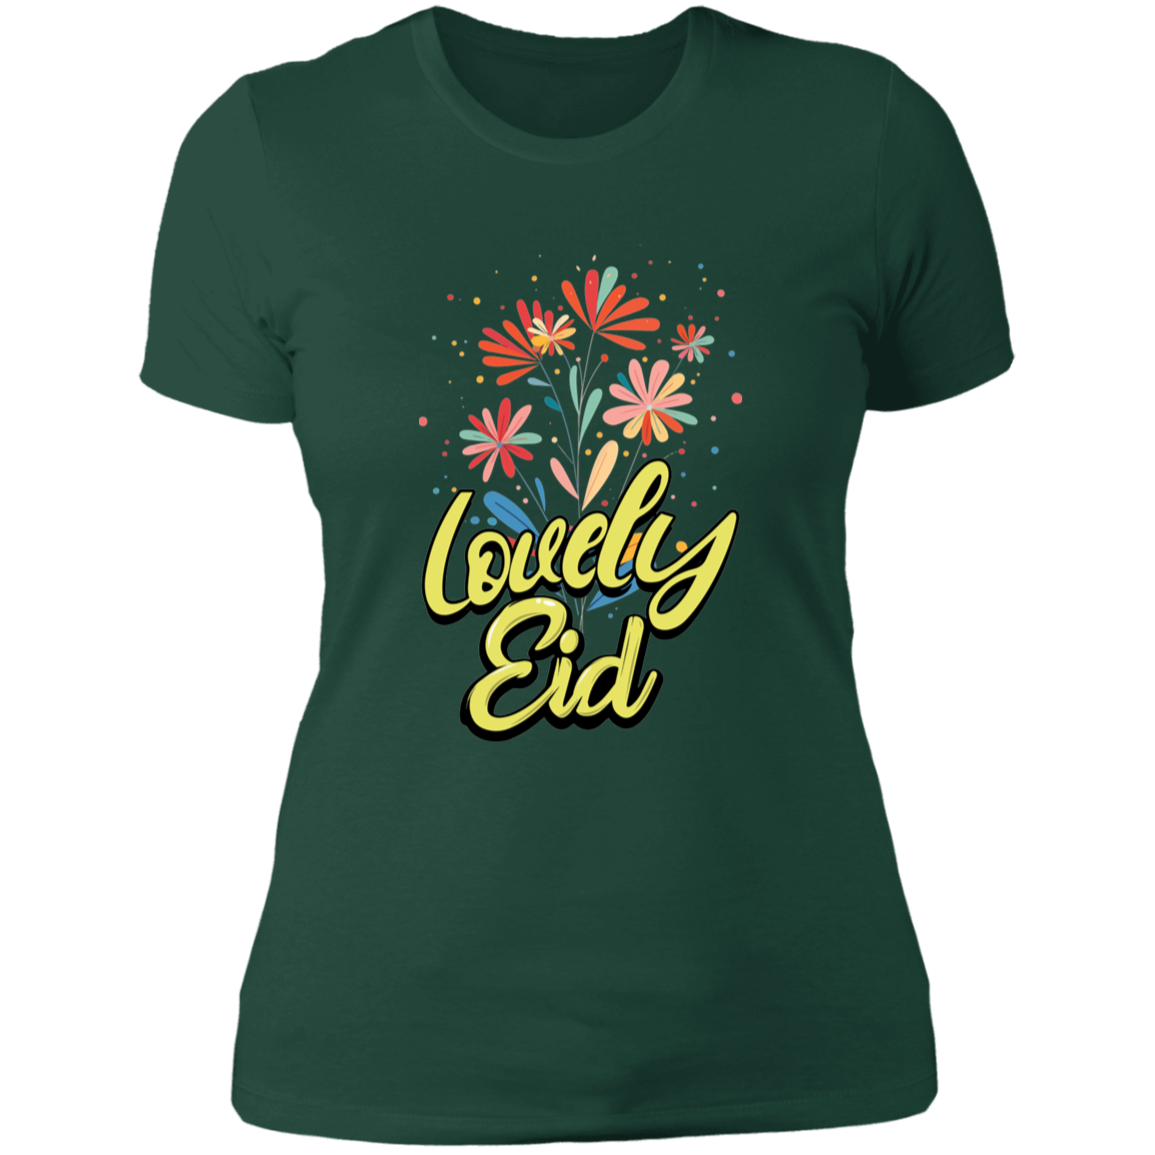 Lovely Eid Ladies T-shirt